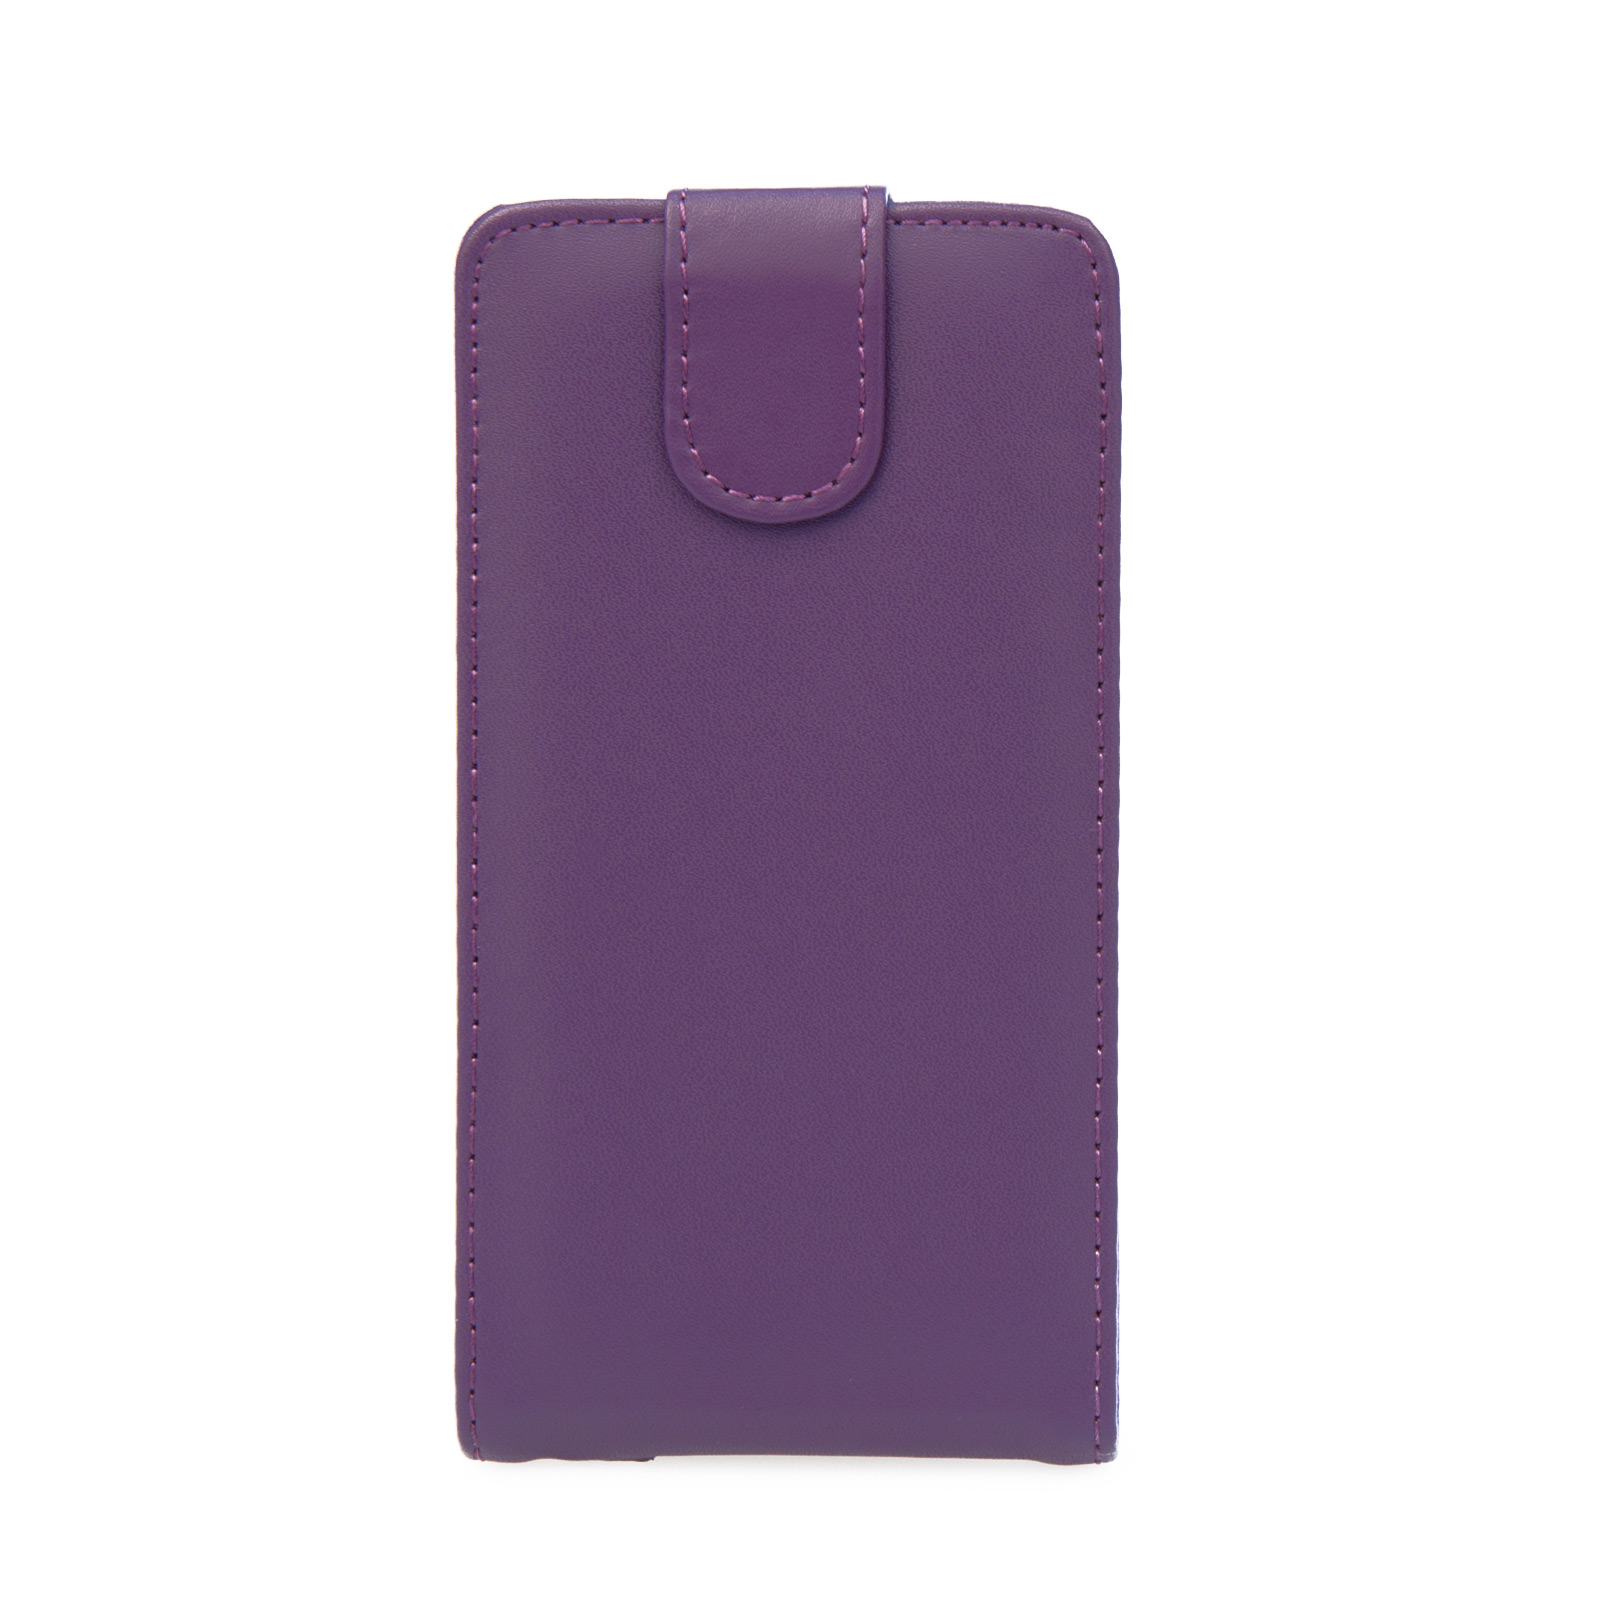 YouSave Accessories LG G3 Leather-Effect Flip Case - Purple